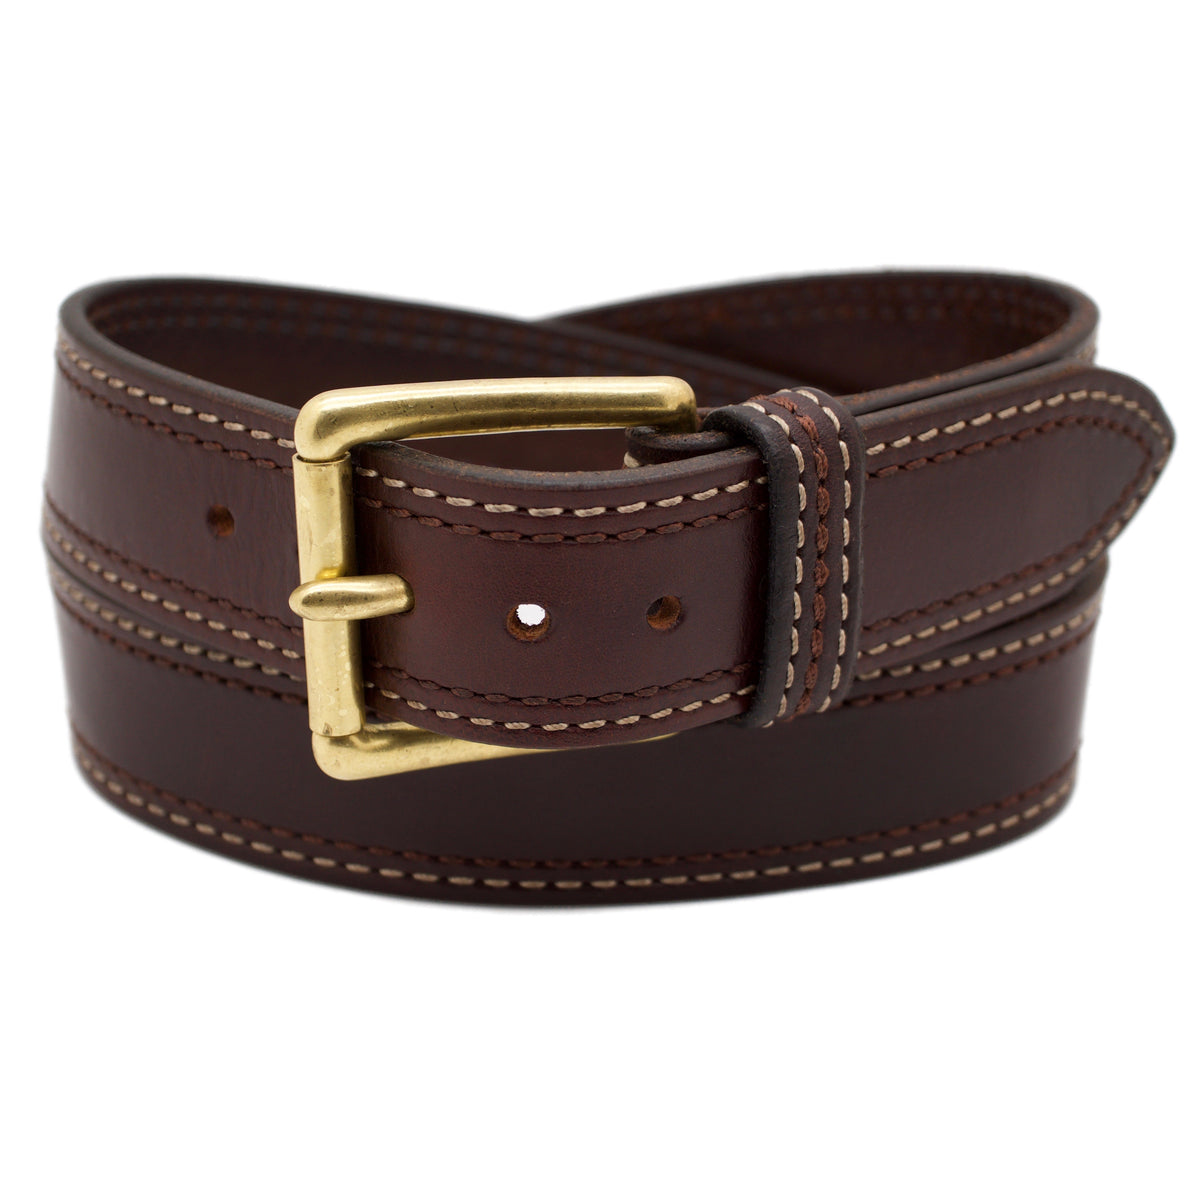 The LEXINGTON WIDE 1.75 Leather Belt